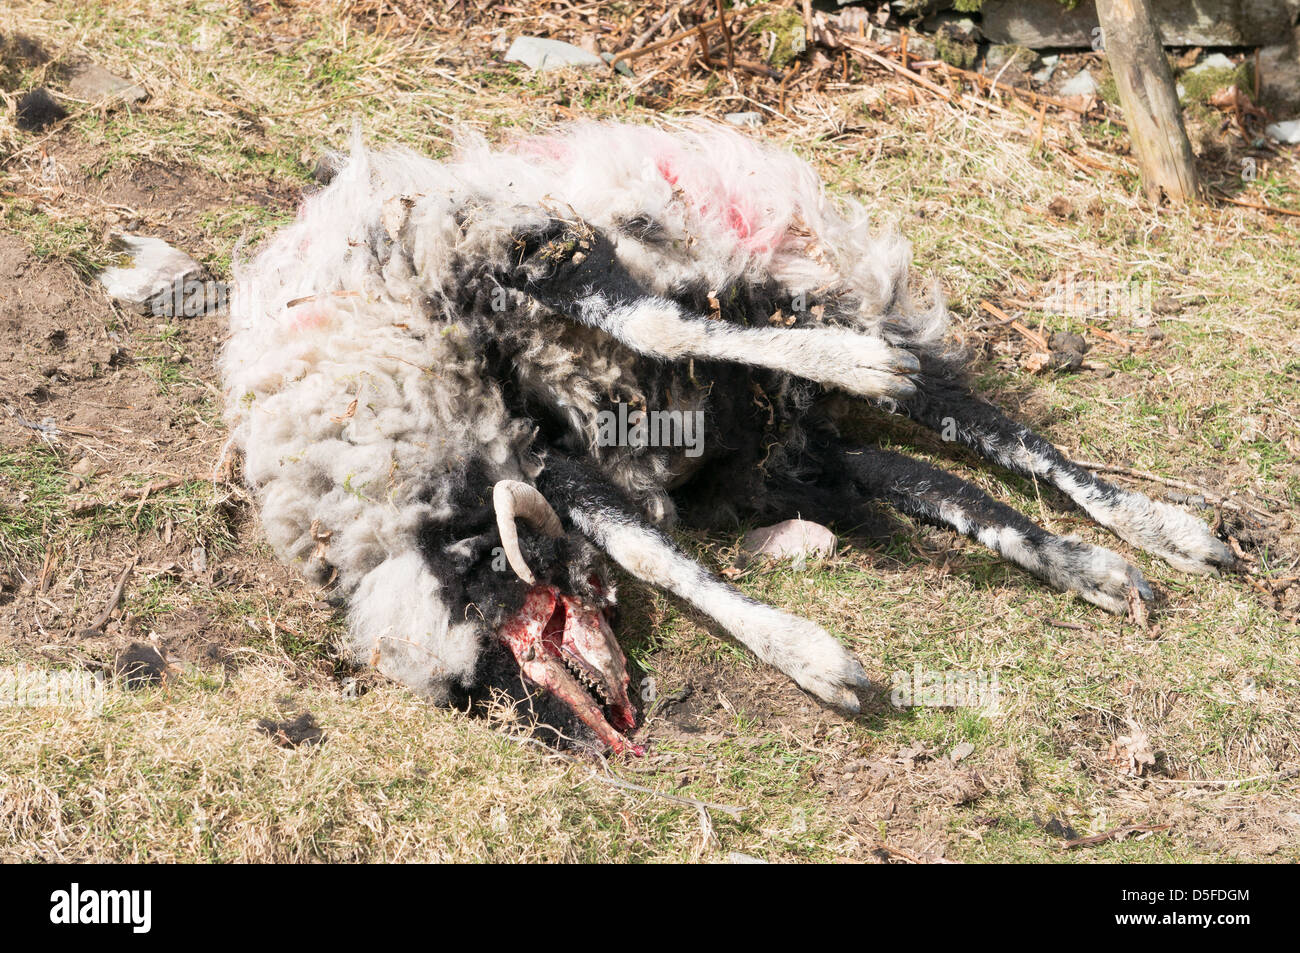 Dead sheep following severe winter weather near Grasmere Cumbria England UK Stock Photo